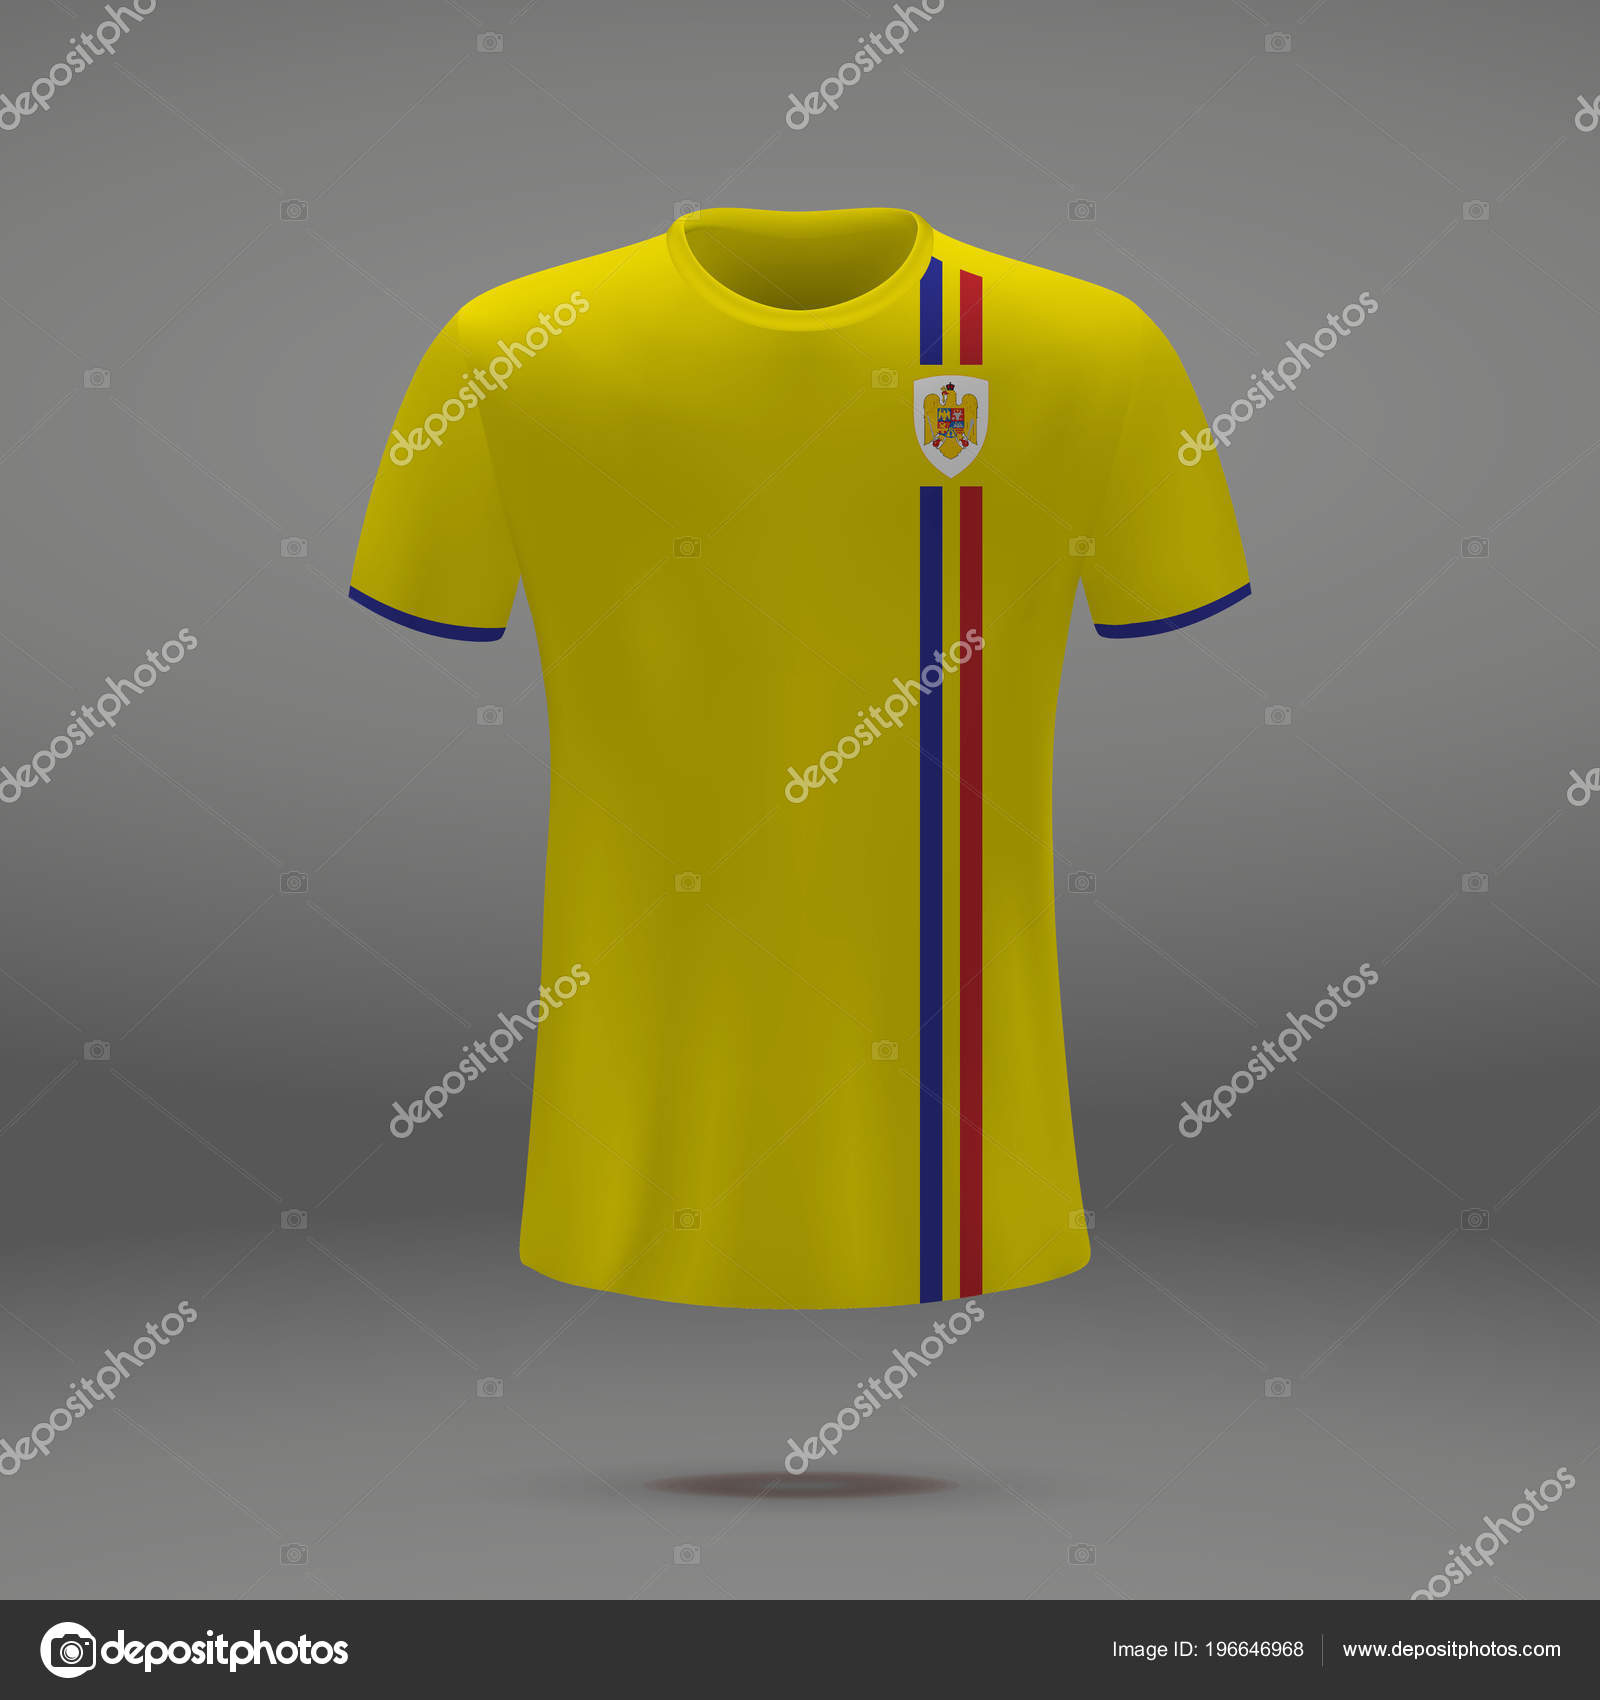 romania soccer jersey